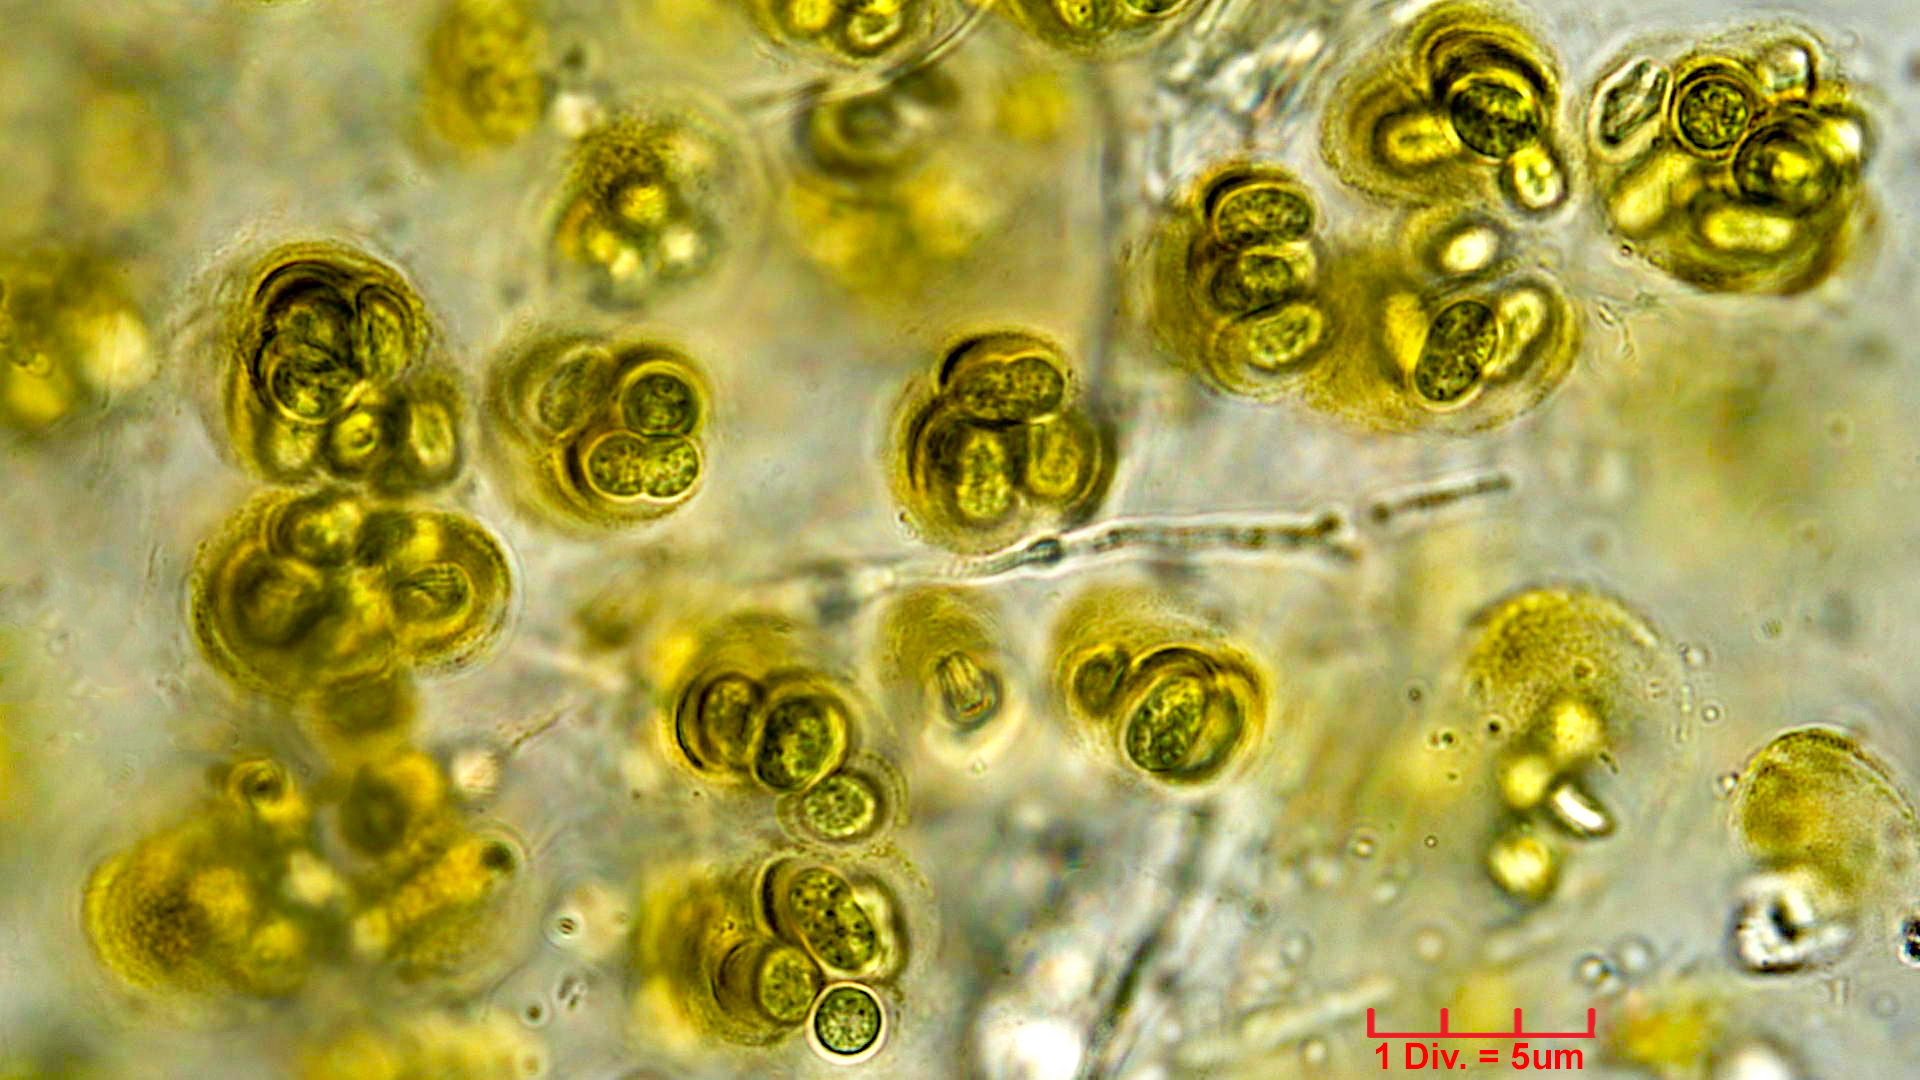 ././Cyanobacteria/Chroococcales/Aphanothecaceae/Gloeothece/fusco-lutea/gloeothece-fusco-lutea-14.jpg